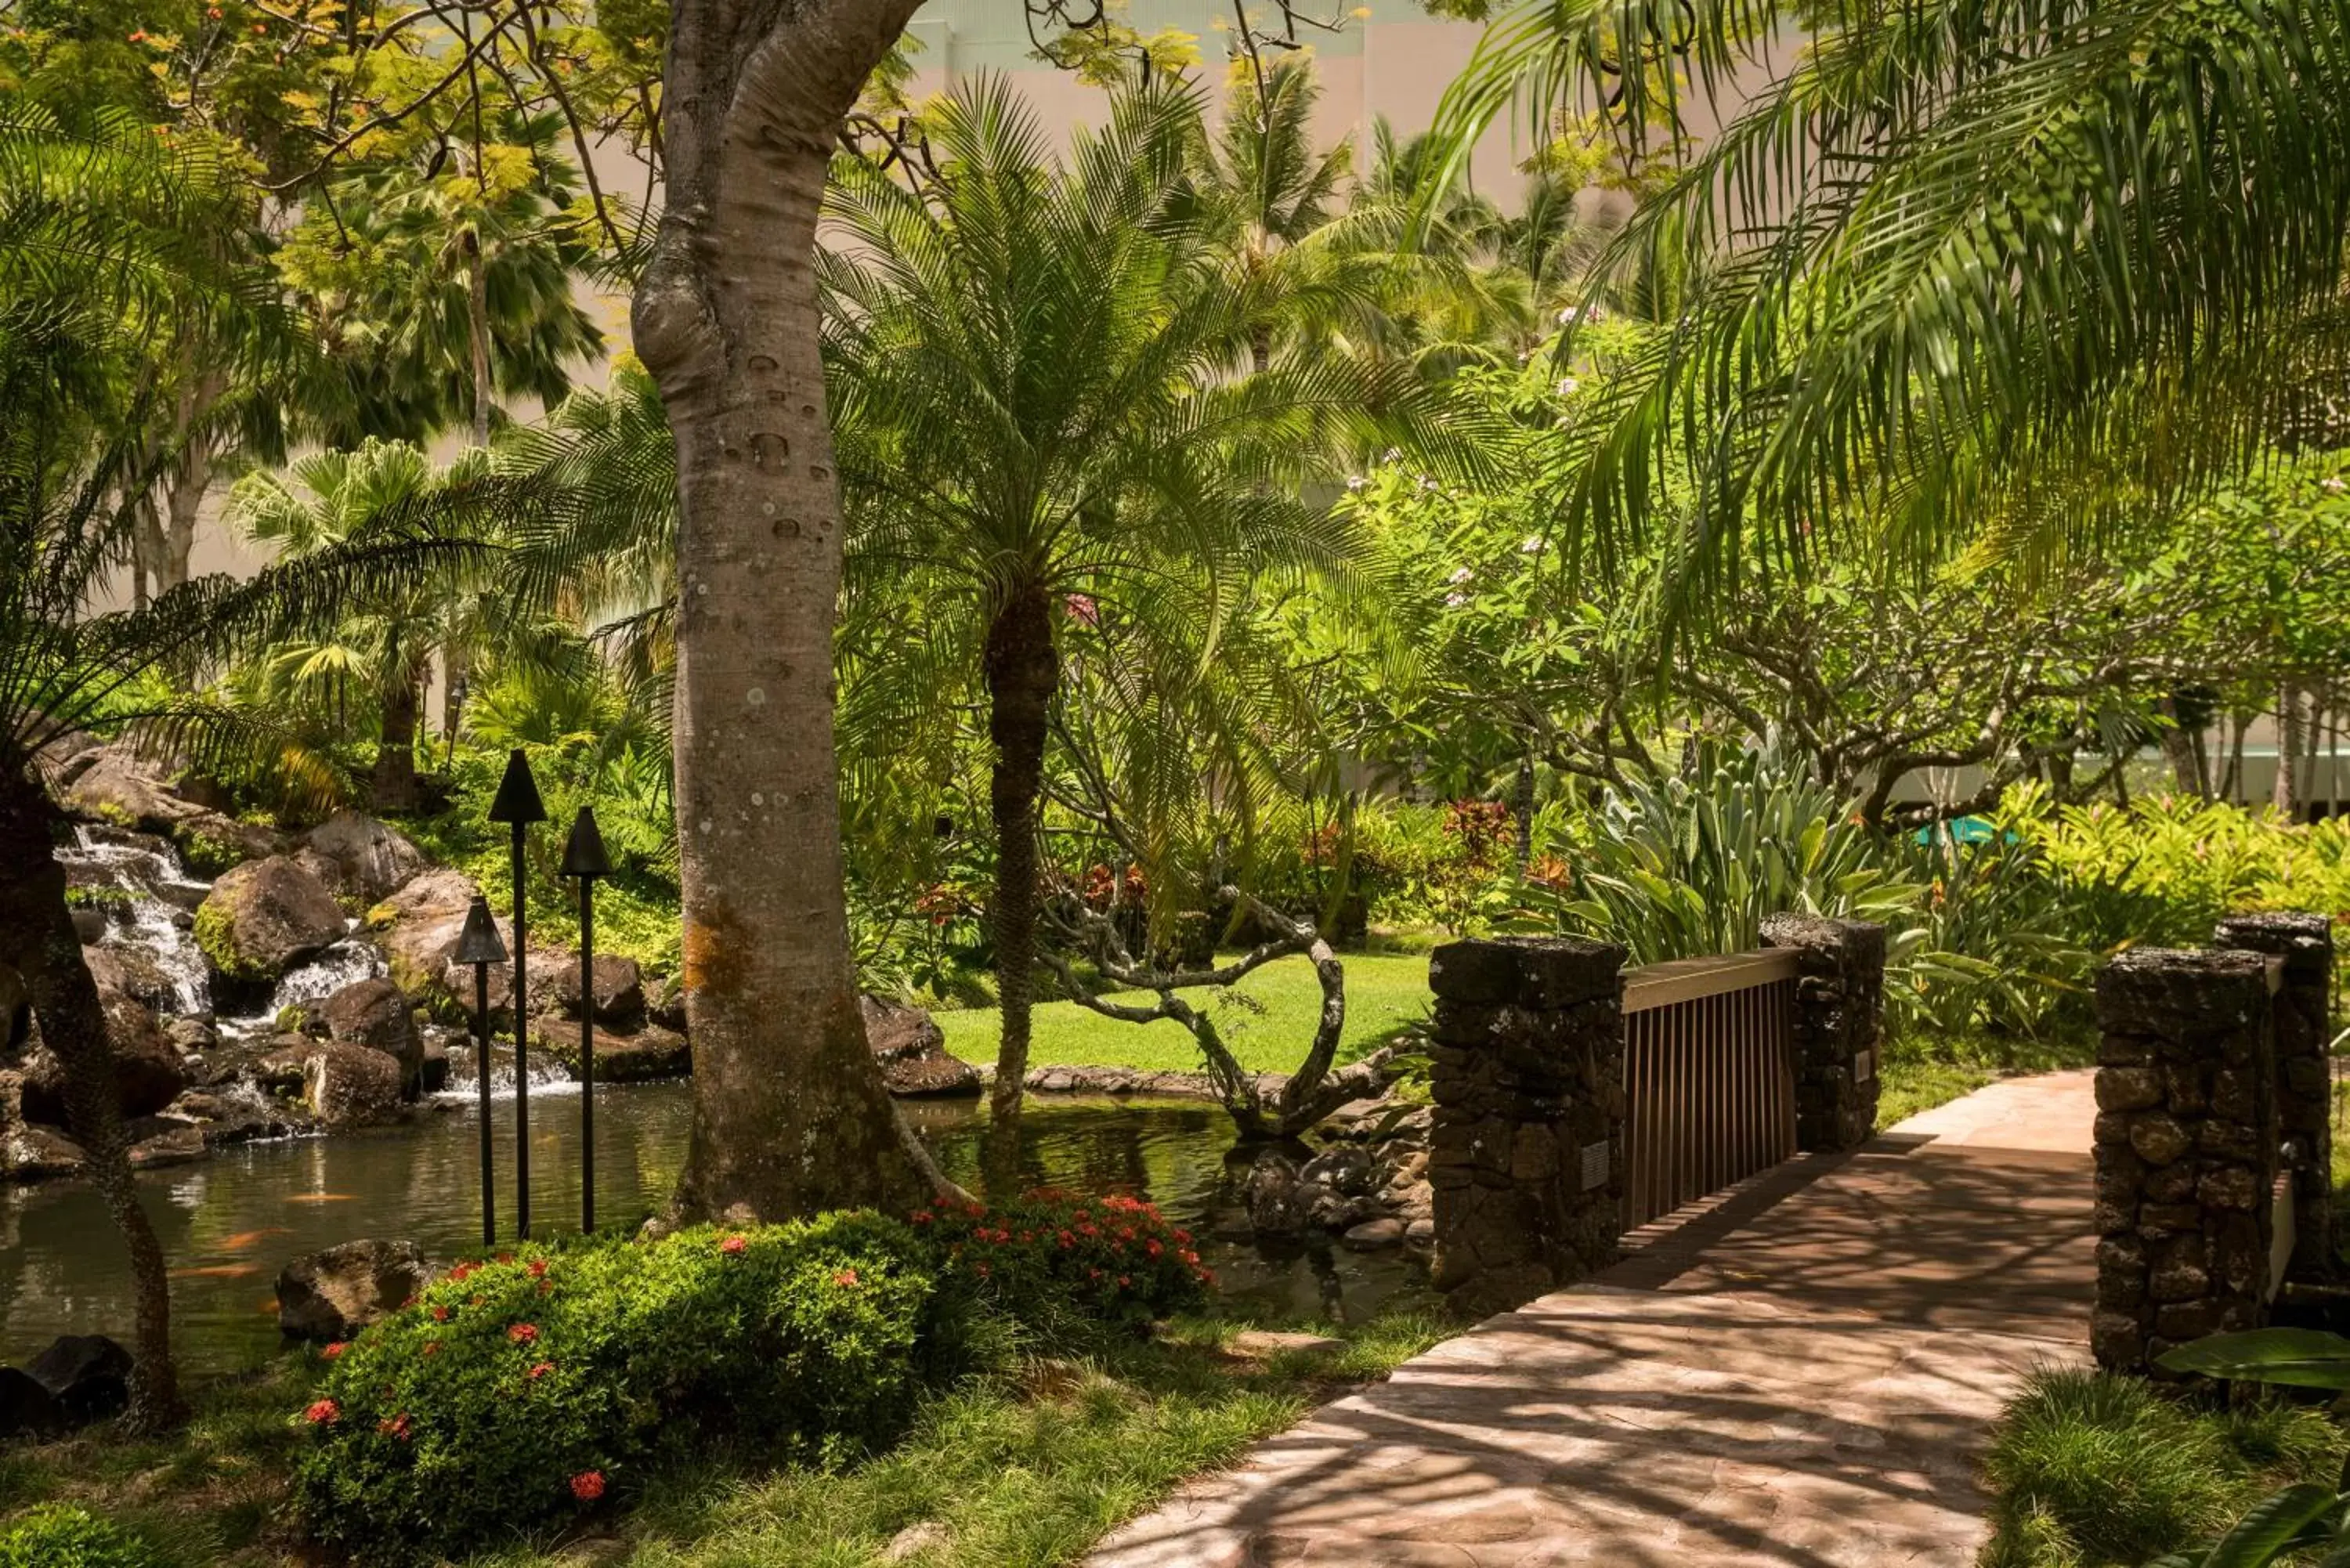 Area and facilities in The Royal Sonesta Kauai Resort Lihue